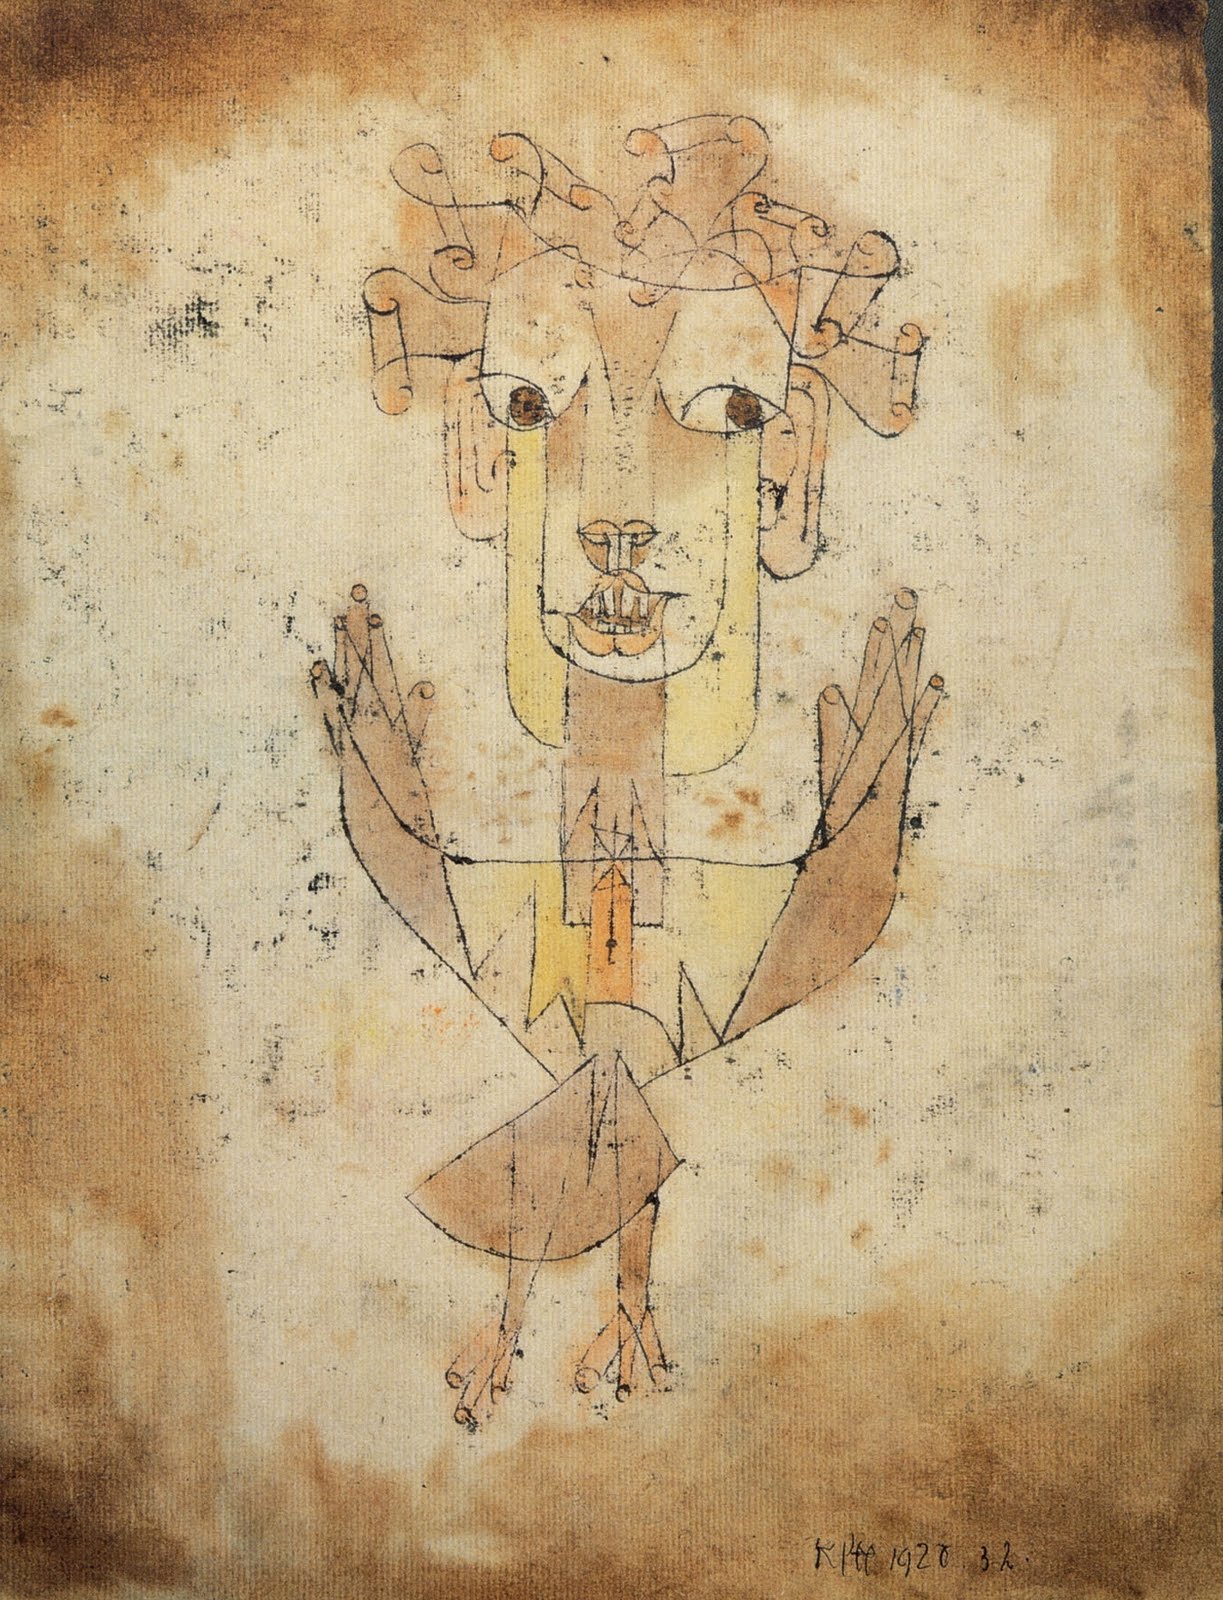 Paul Klee, Angelus Novus